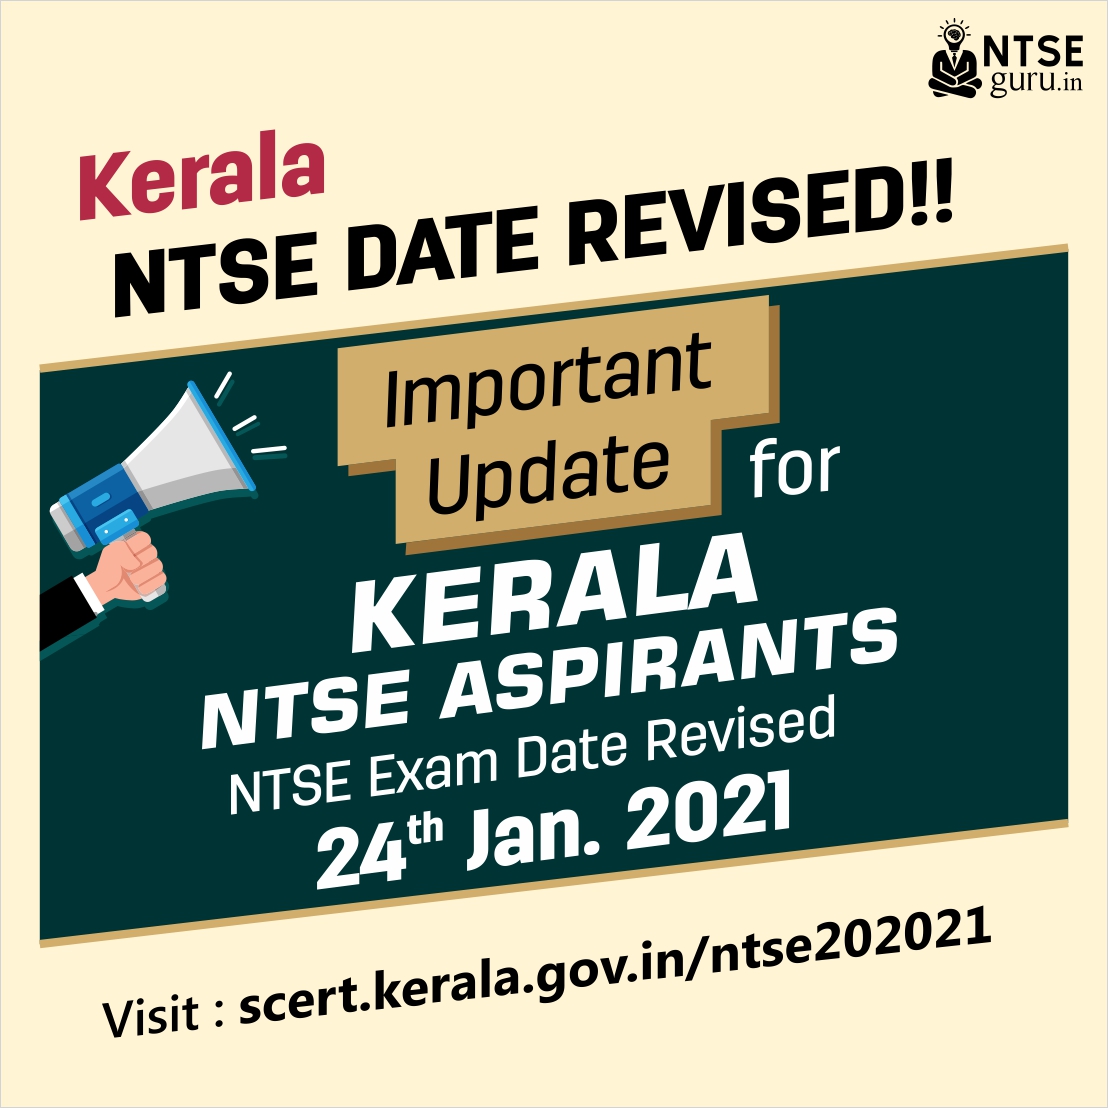 Kerala NTSE Exam Date